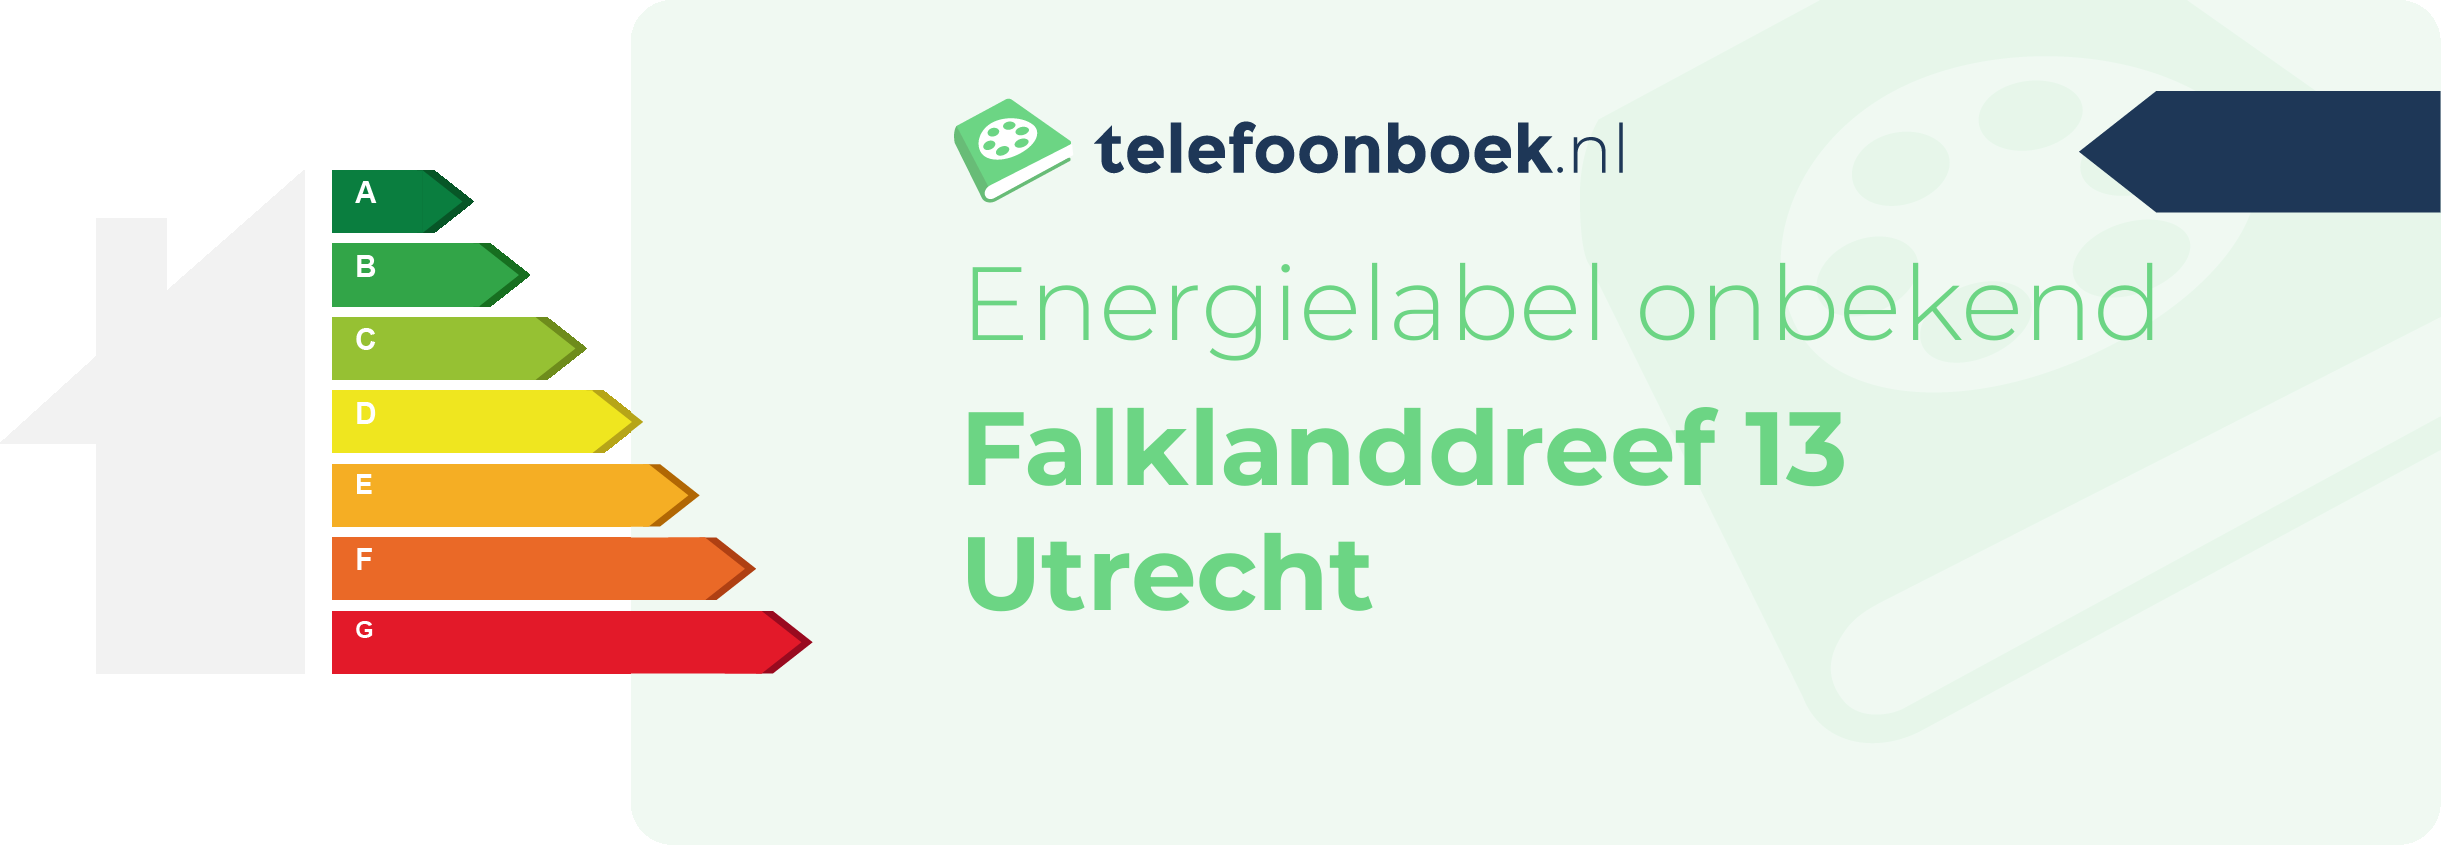 Energielabel Falklanddreef 13 Utrecht